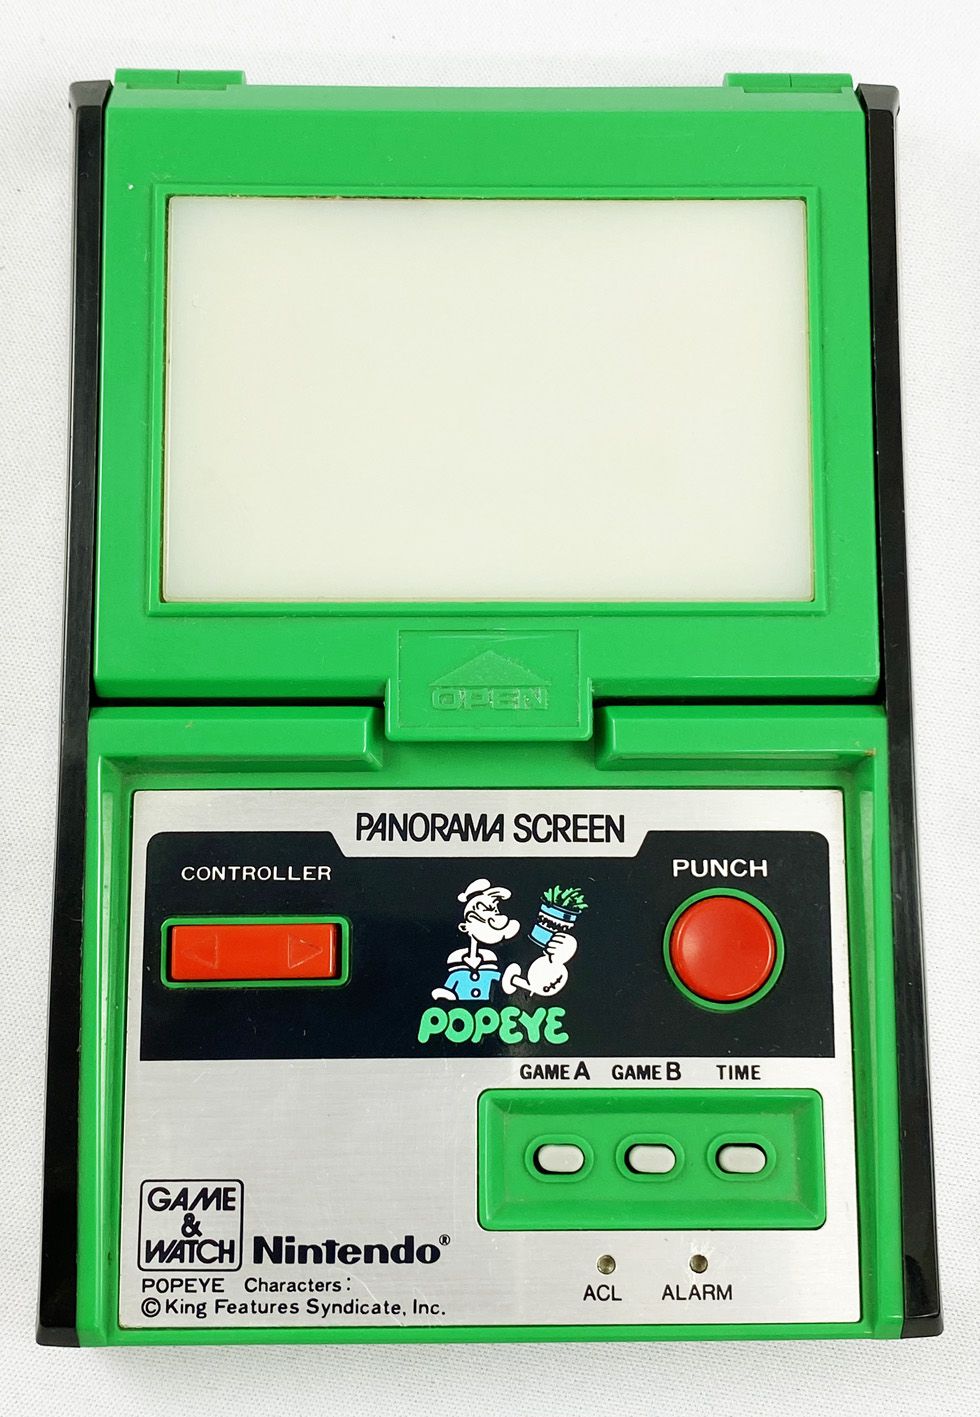 kobling grit at ringe Nintendo Game & Watch - Panorama Screen - Popeye (PG-92) loose without box